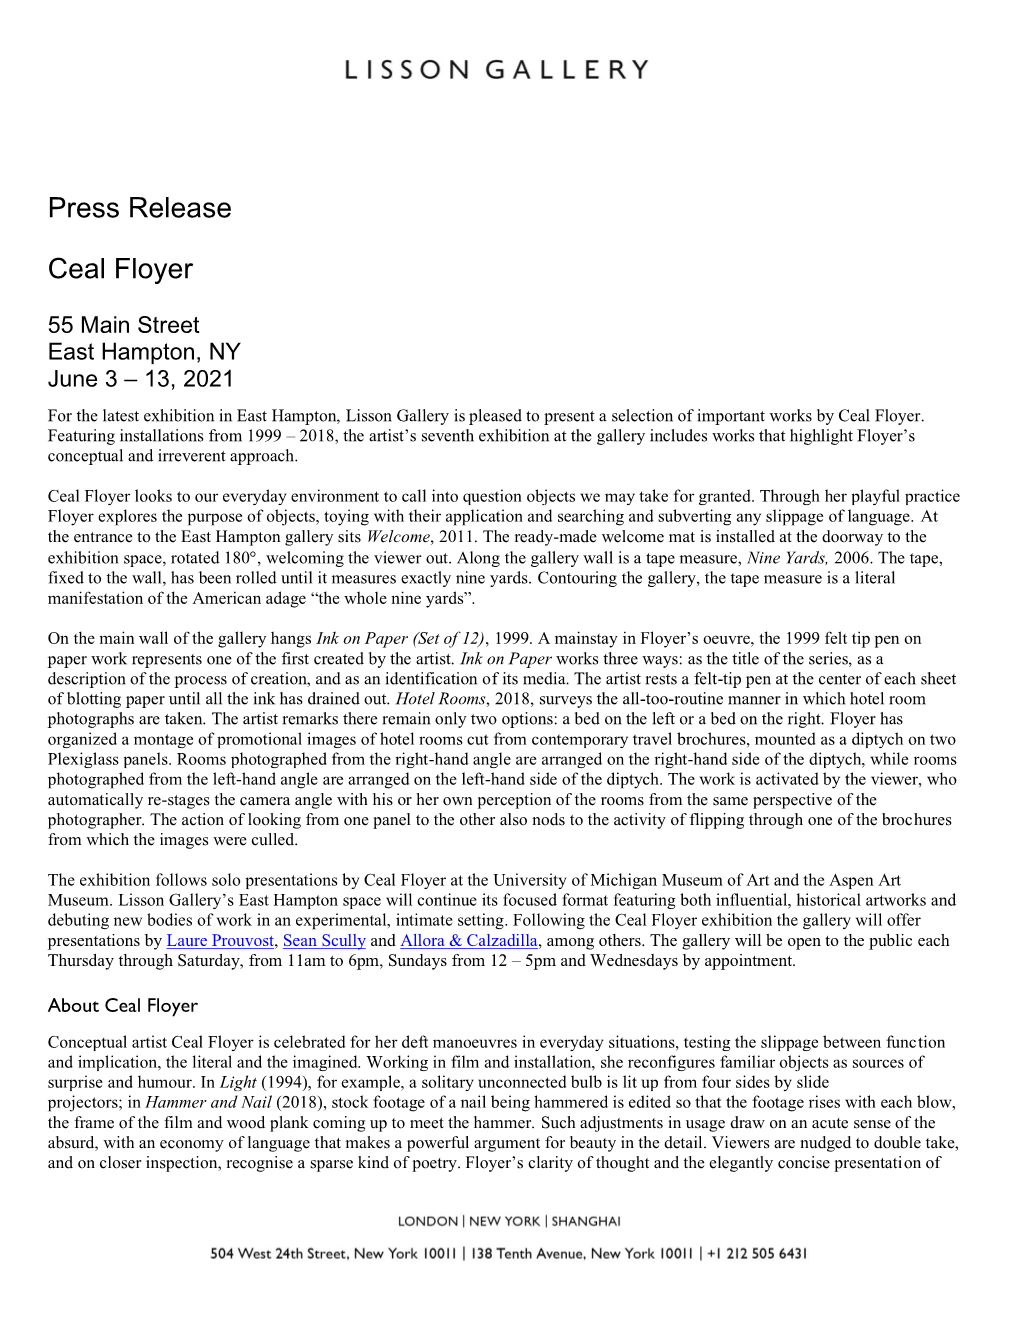 Press Release Ceal Floyer